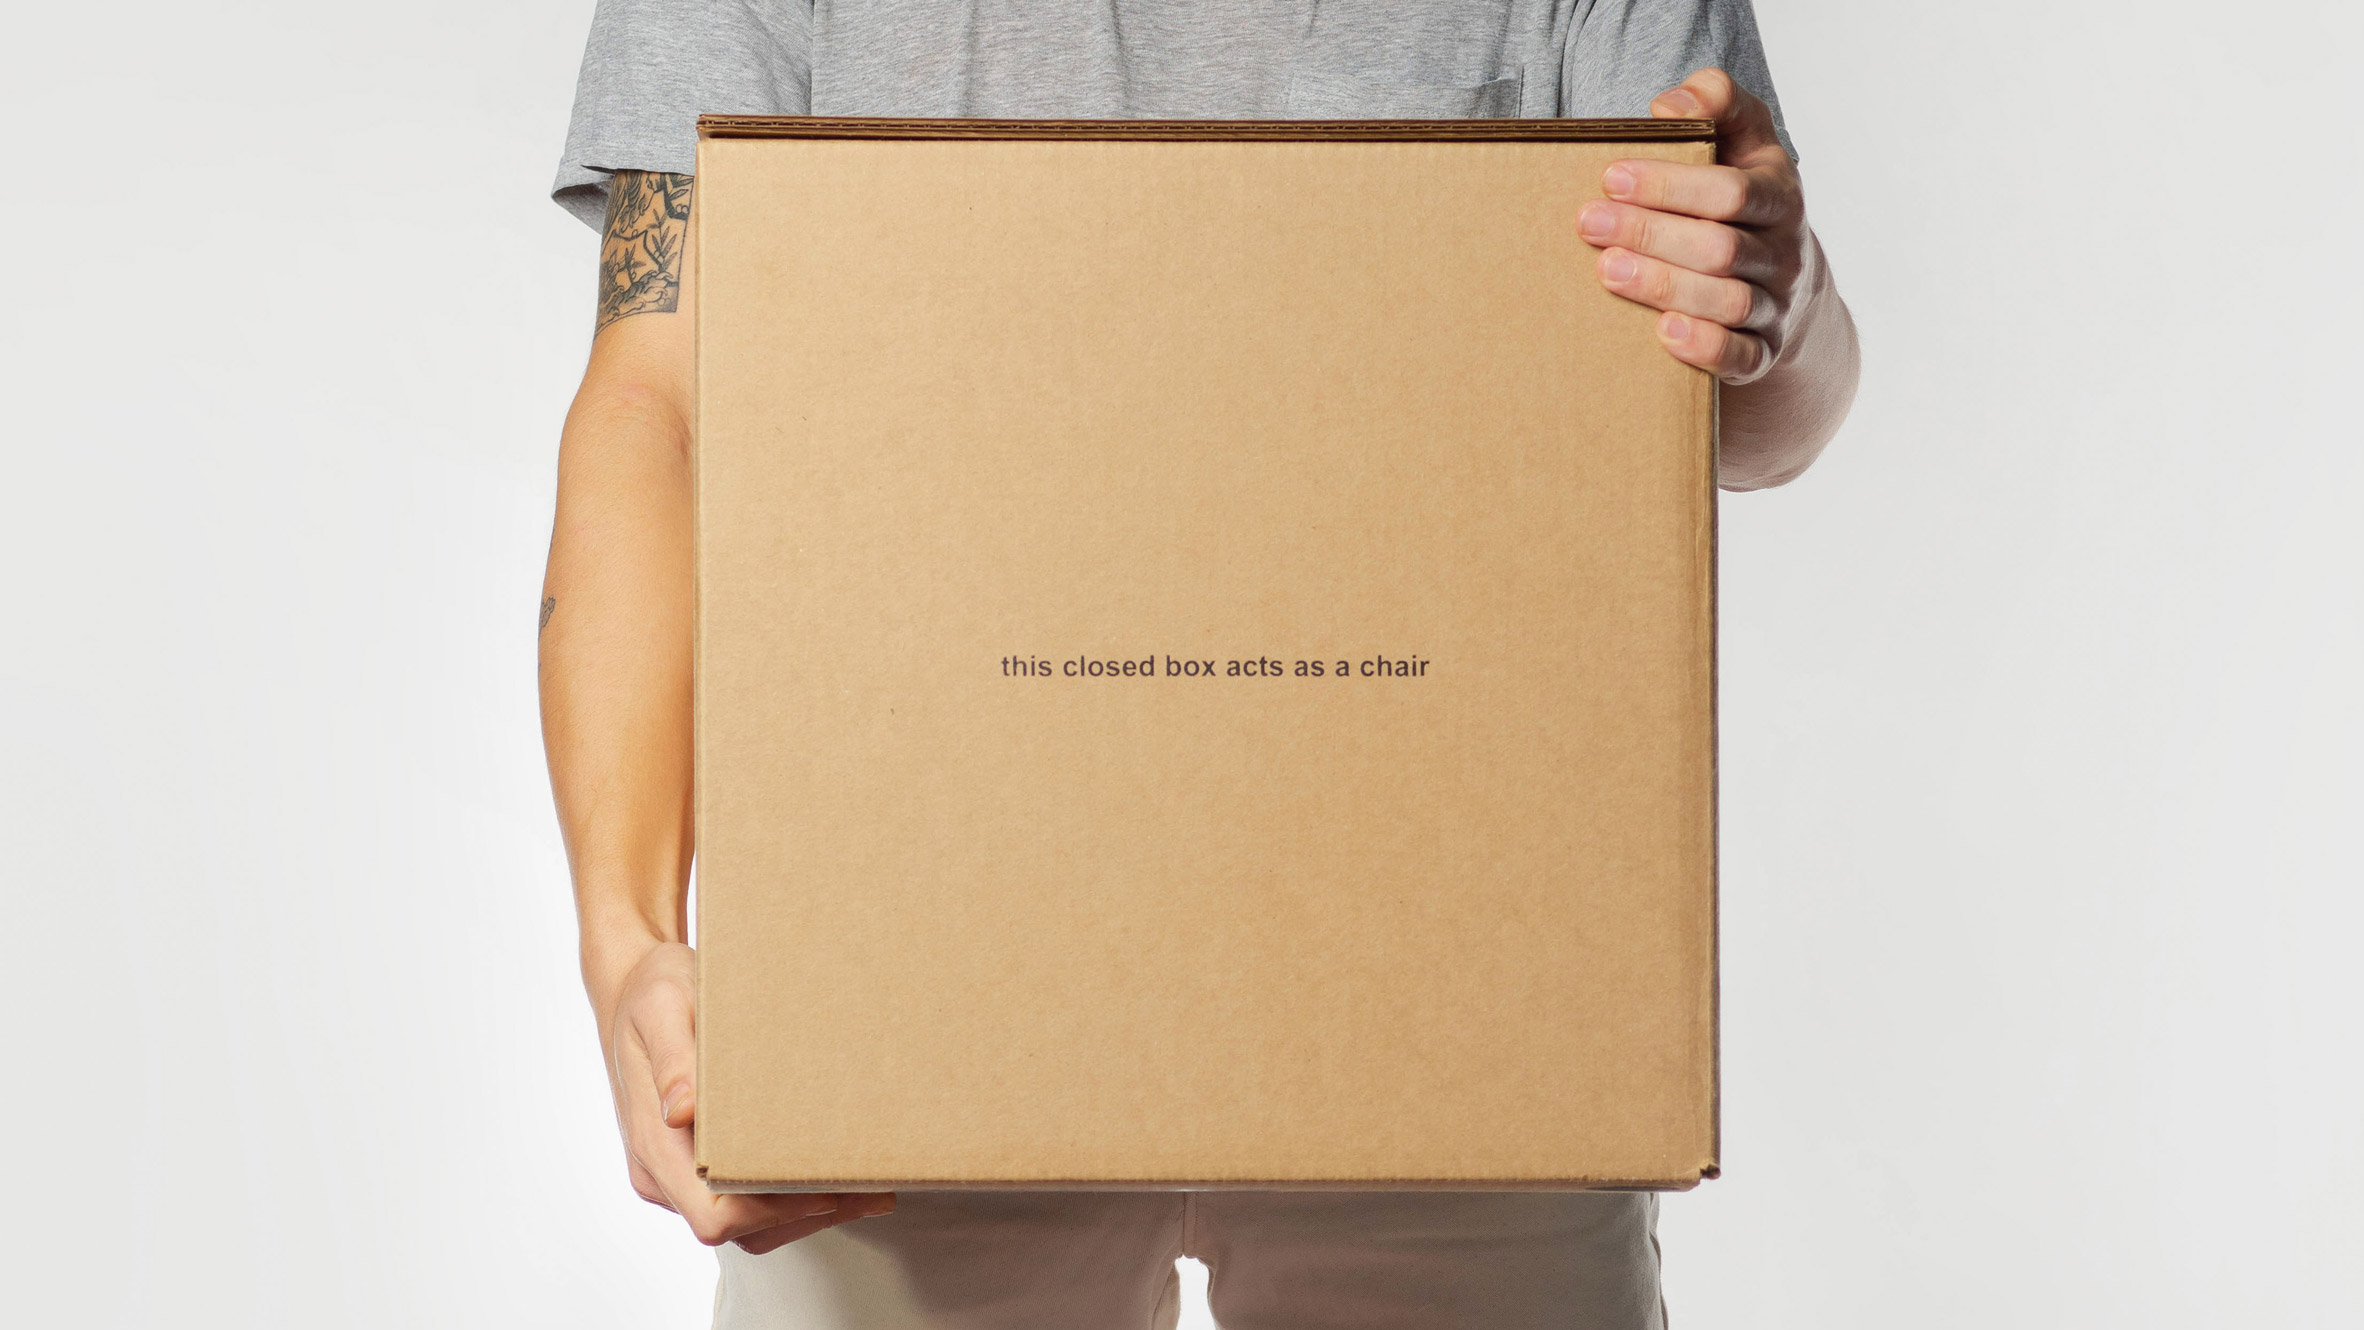 Studio dtttww reimagines cardboard box as "accidental chair"